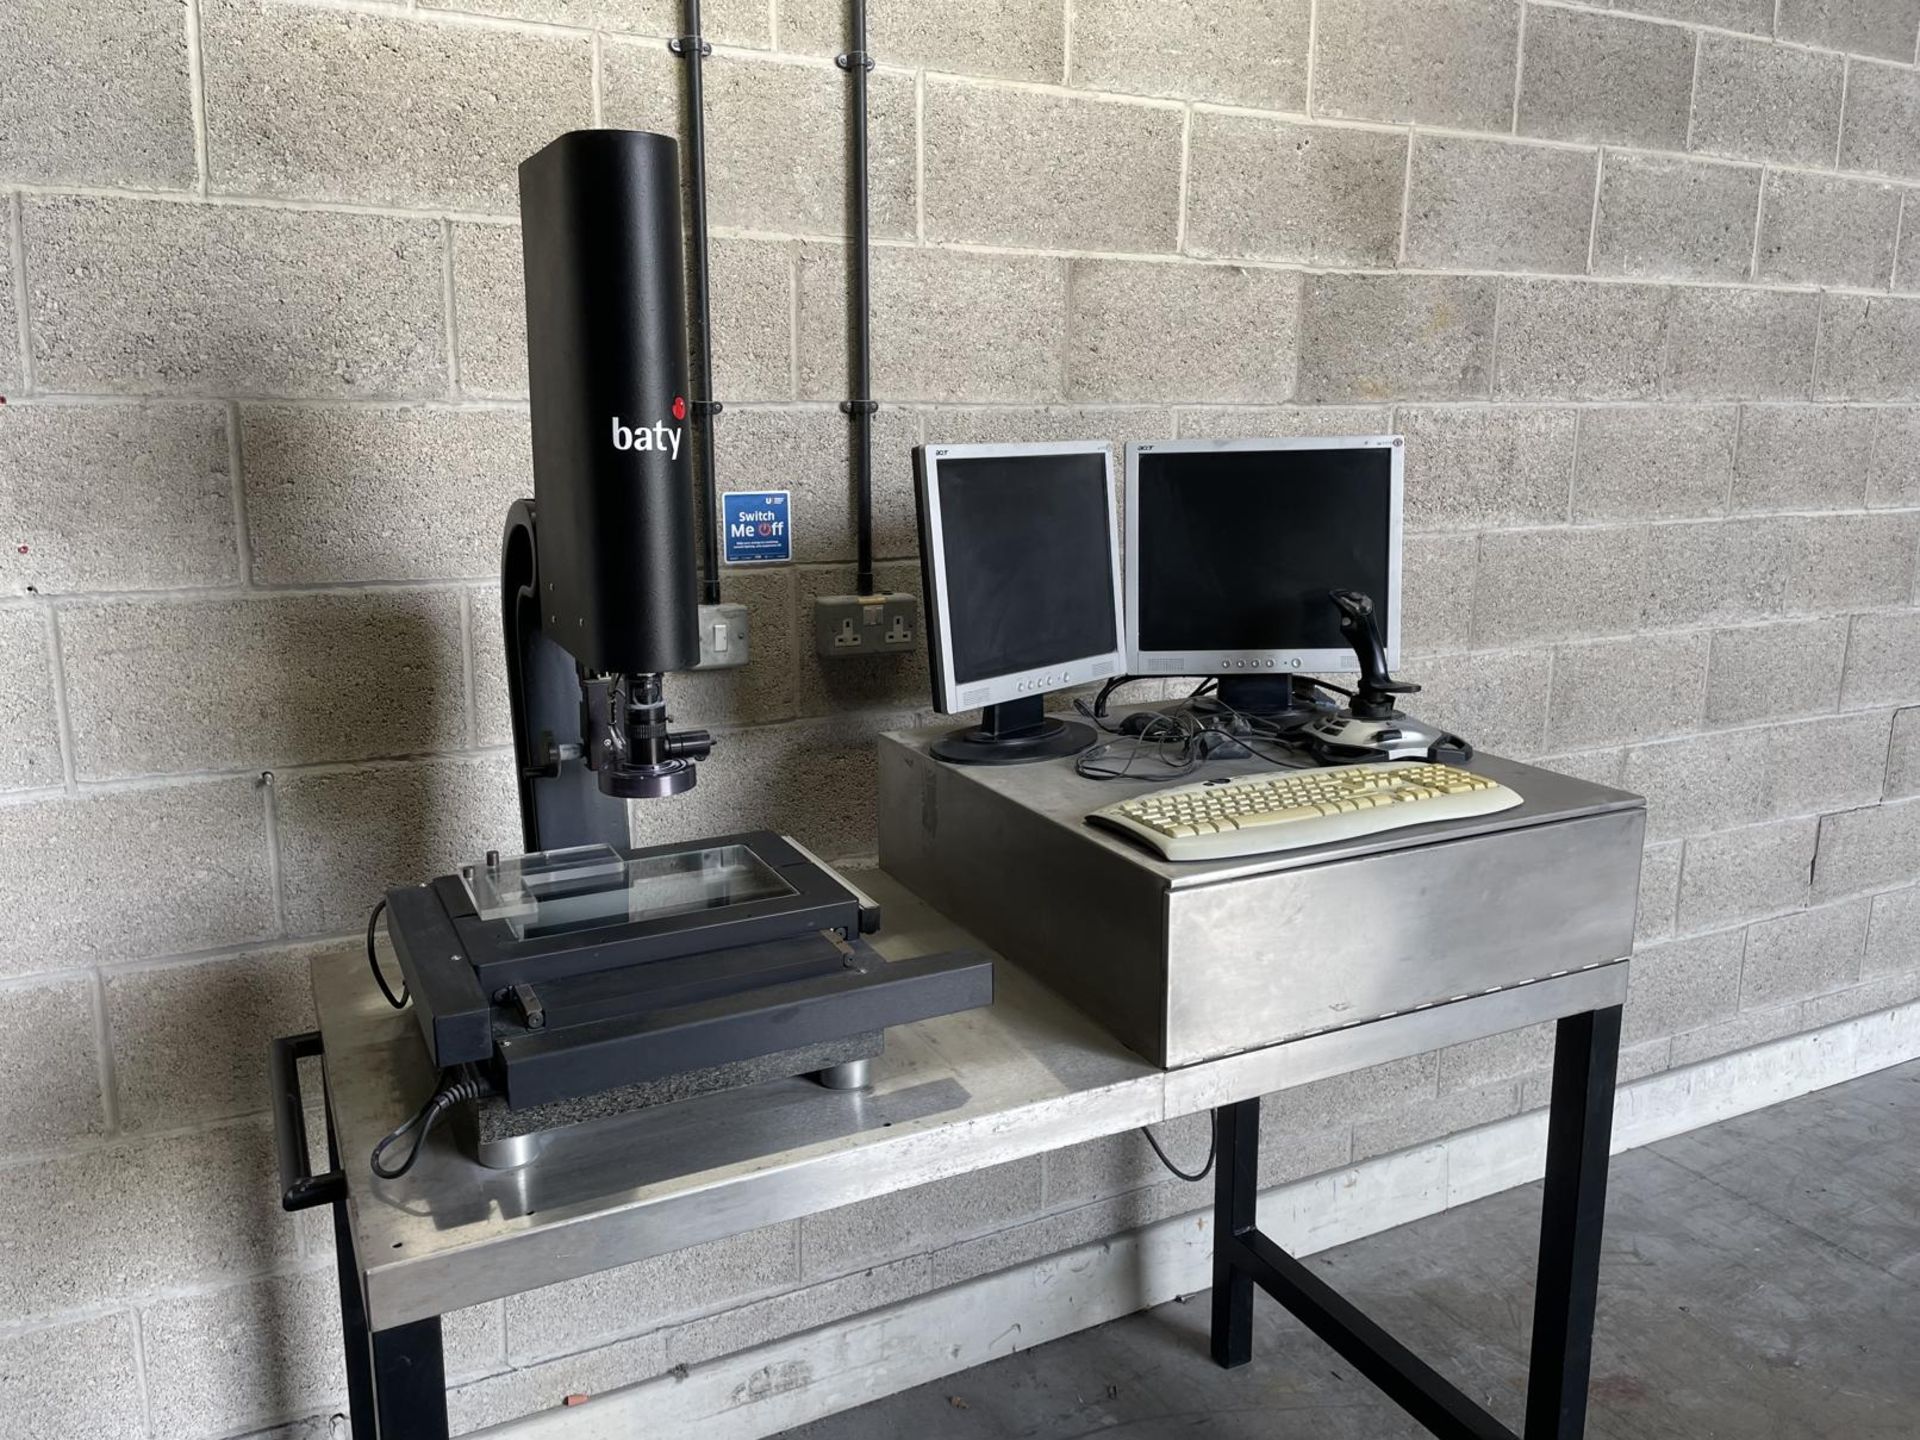 Baty 356-05-CNC Video Measuring System Serial No. 0501